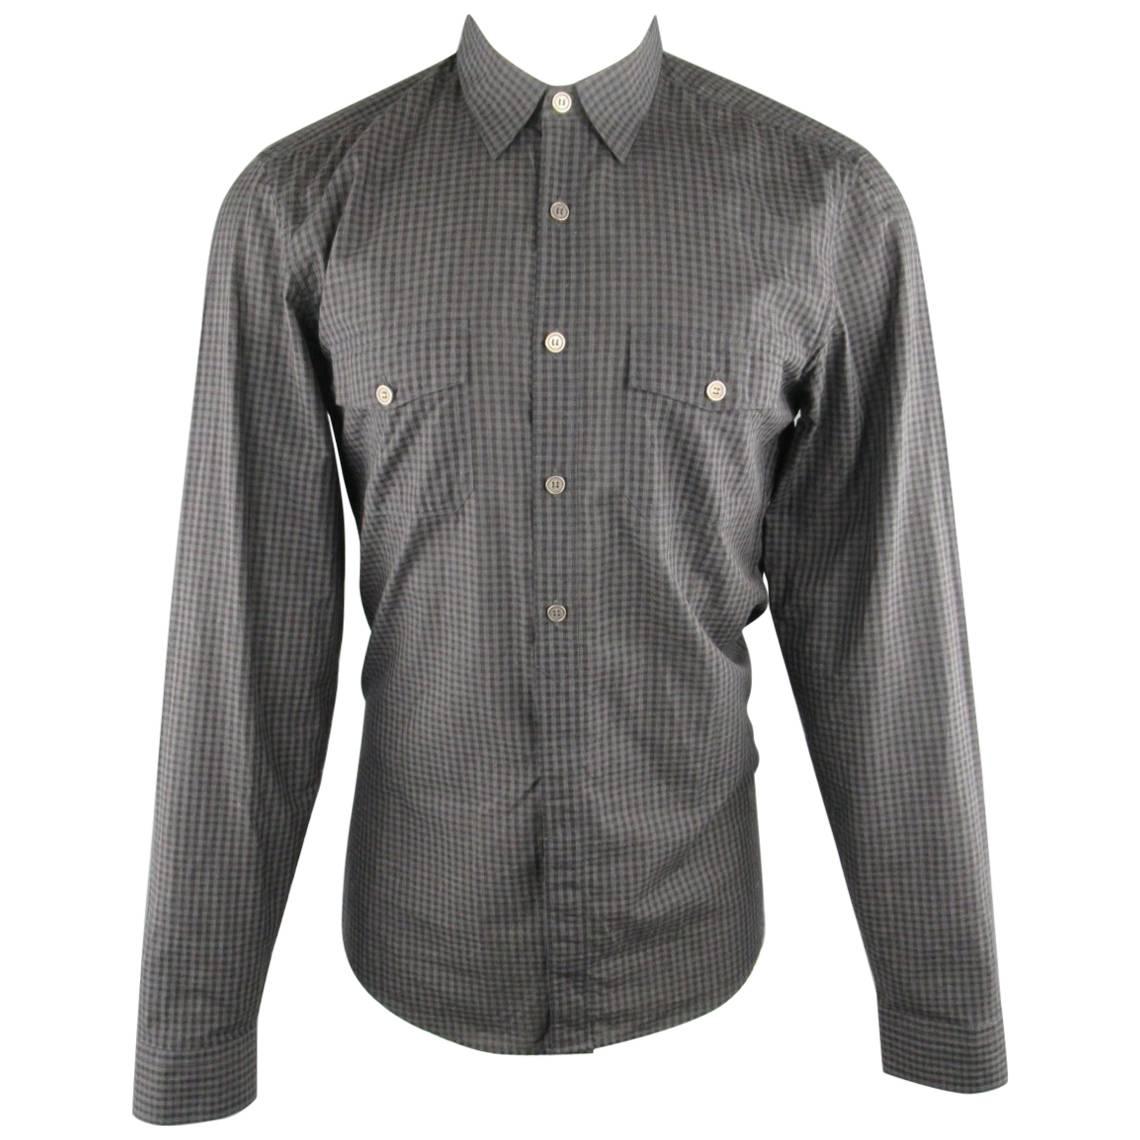 GUCCI Size M Grey & Black Checkered Plaid Cotton Blend Long Sleeve Shirt